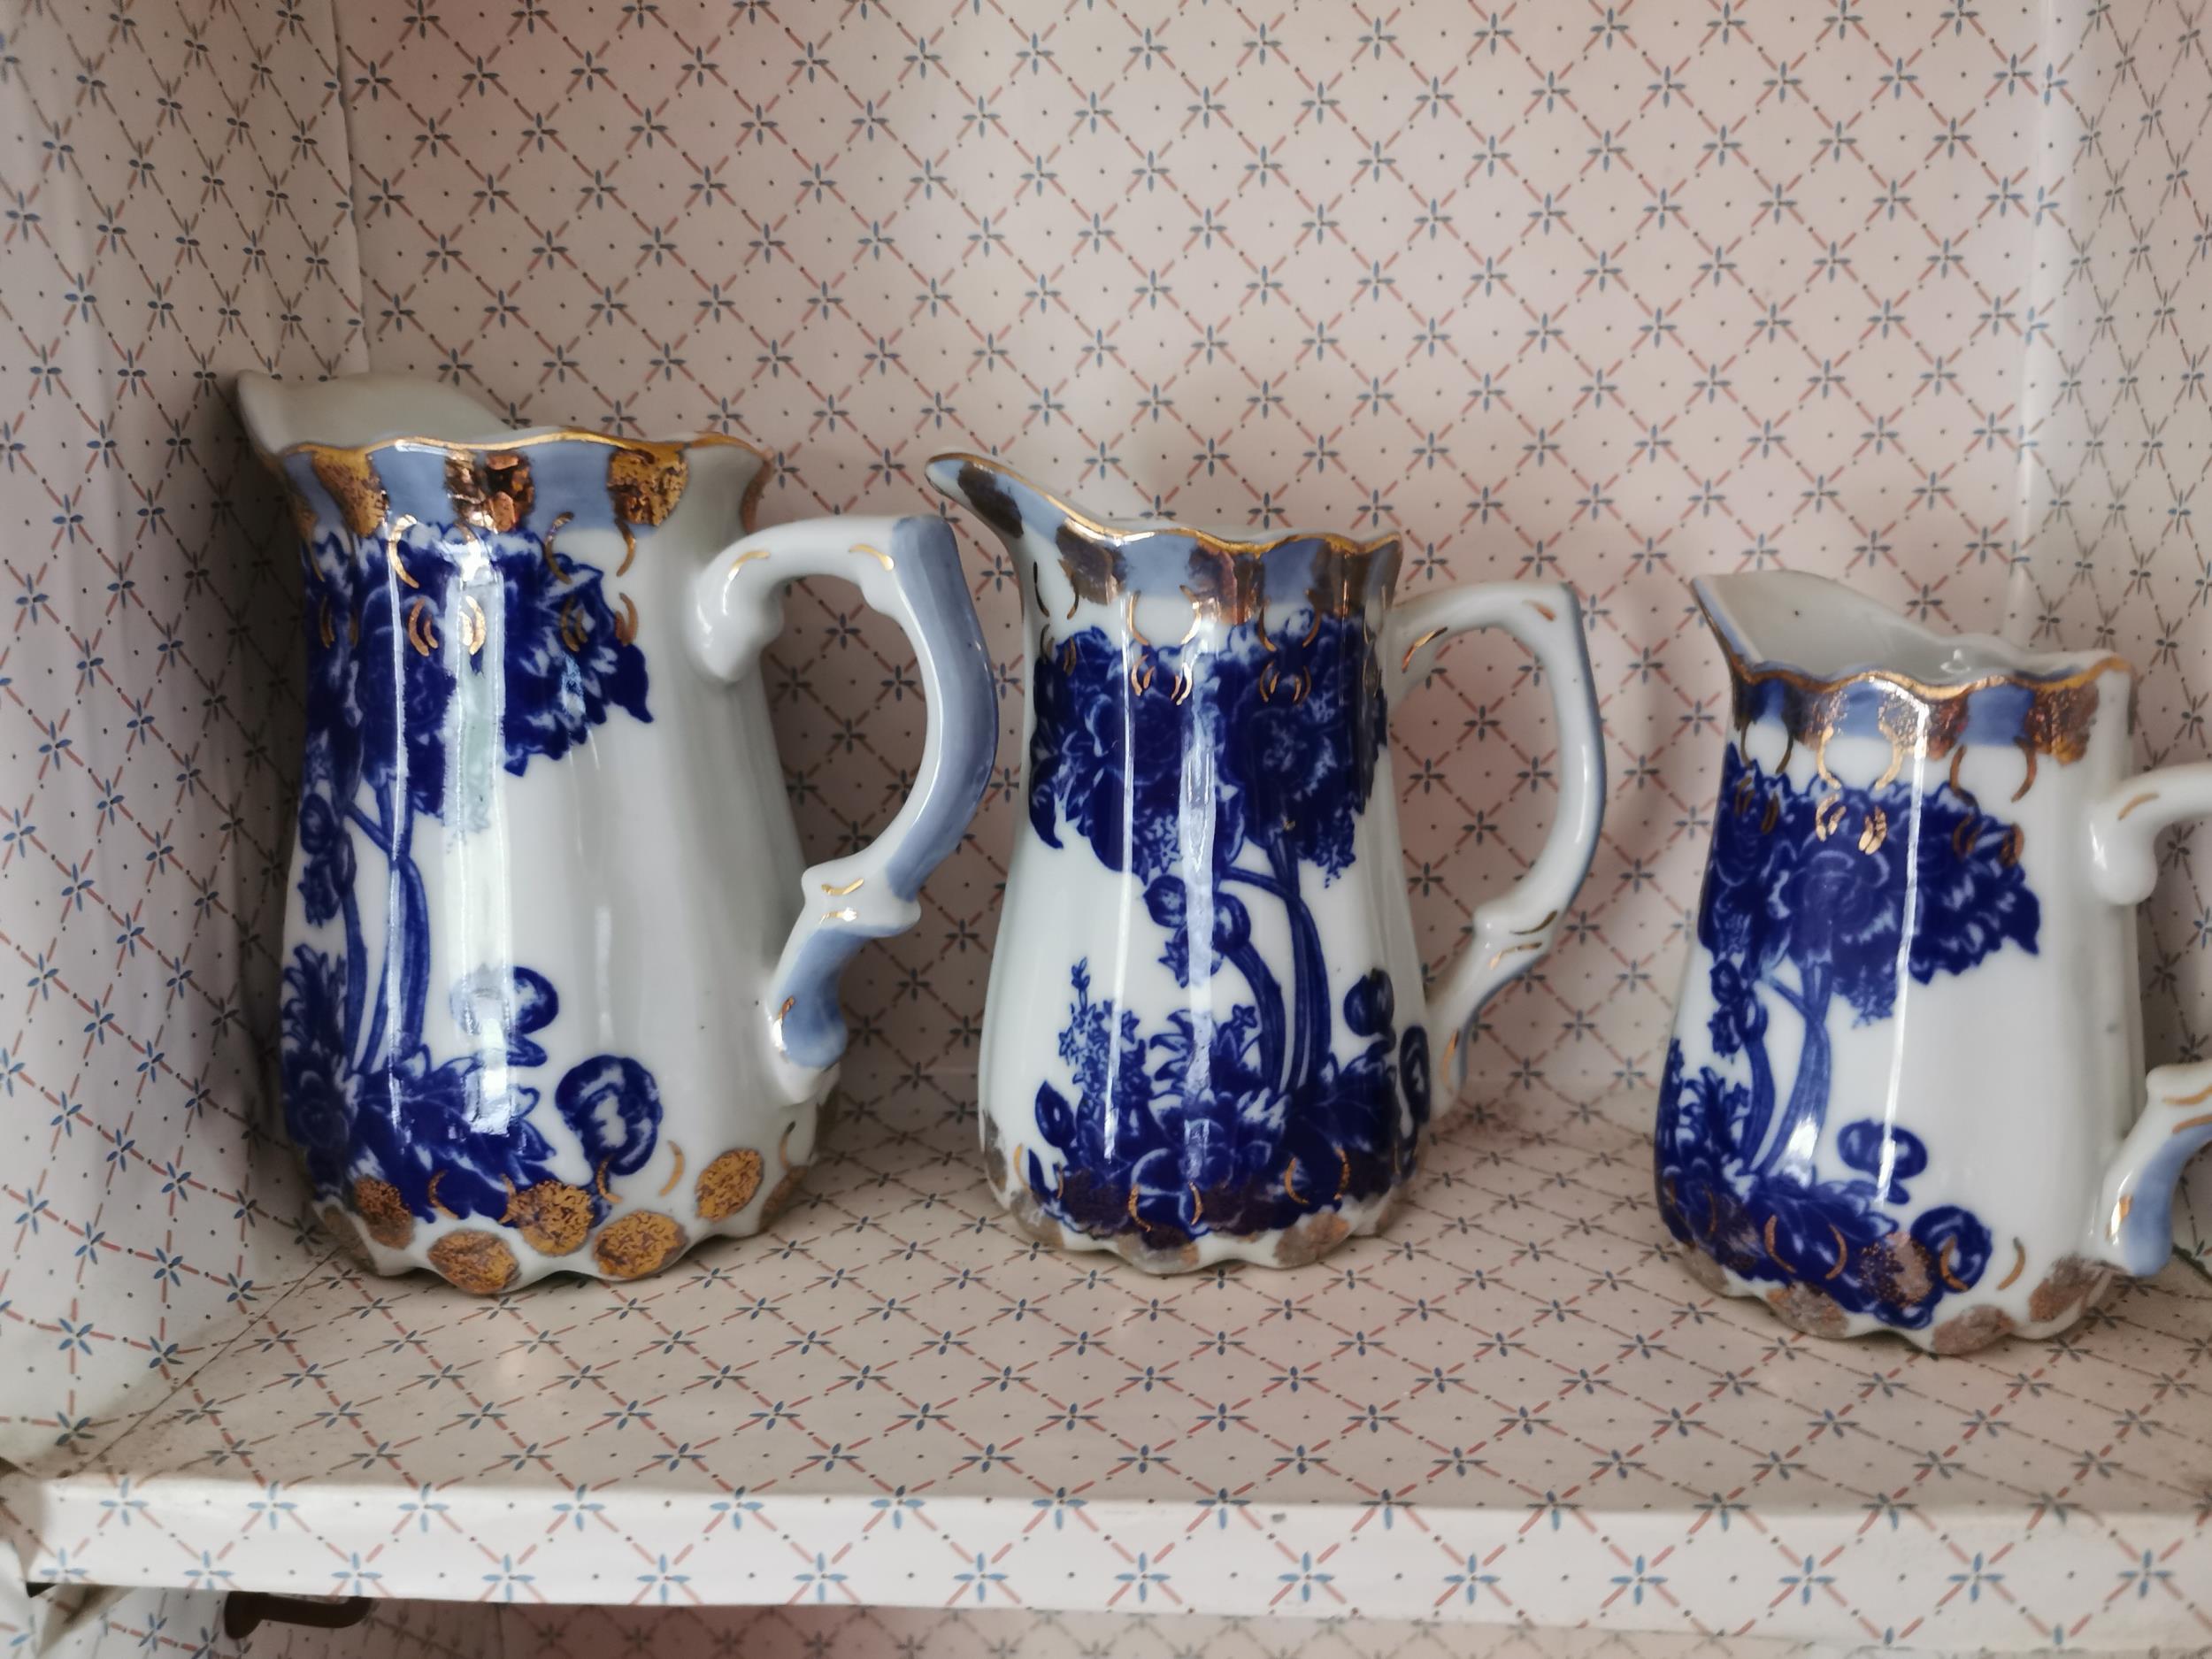 Set of five graduated blue and white ceramic jugs { 21cm H X 14cm Dia - 11cm H X 9cm Dia }.